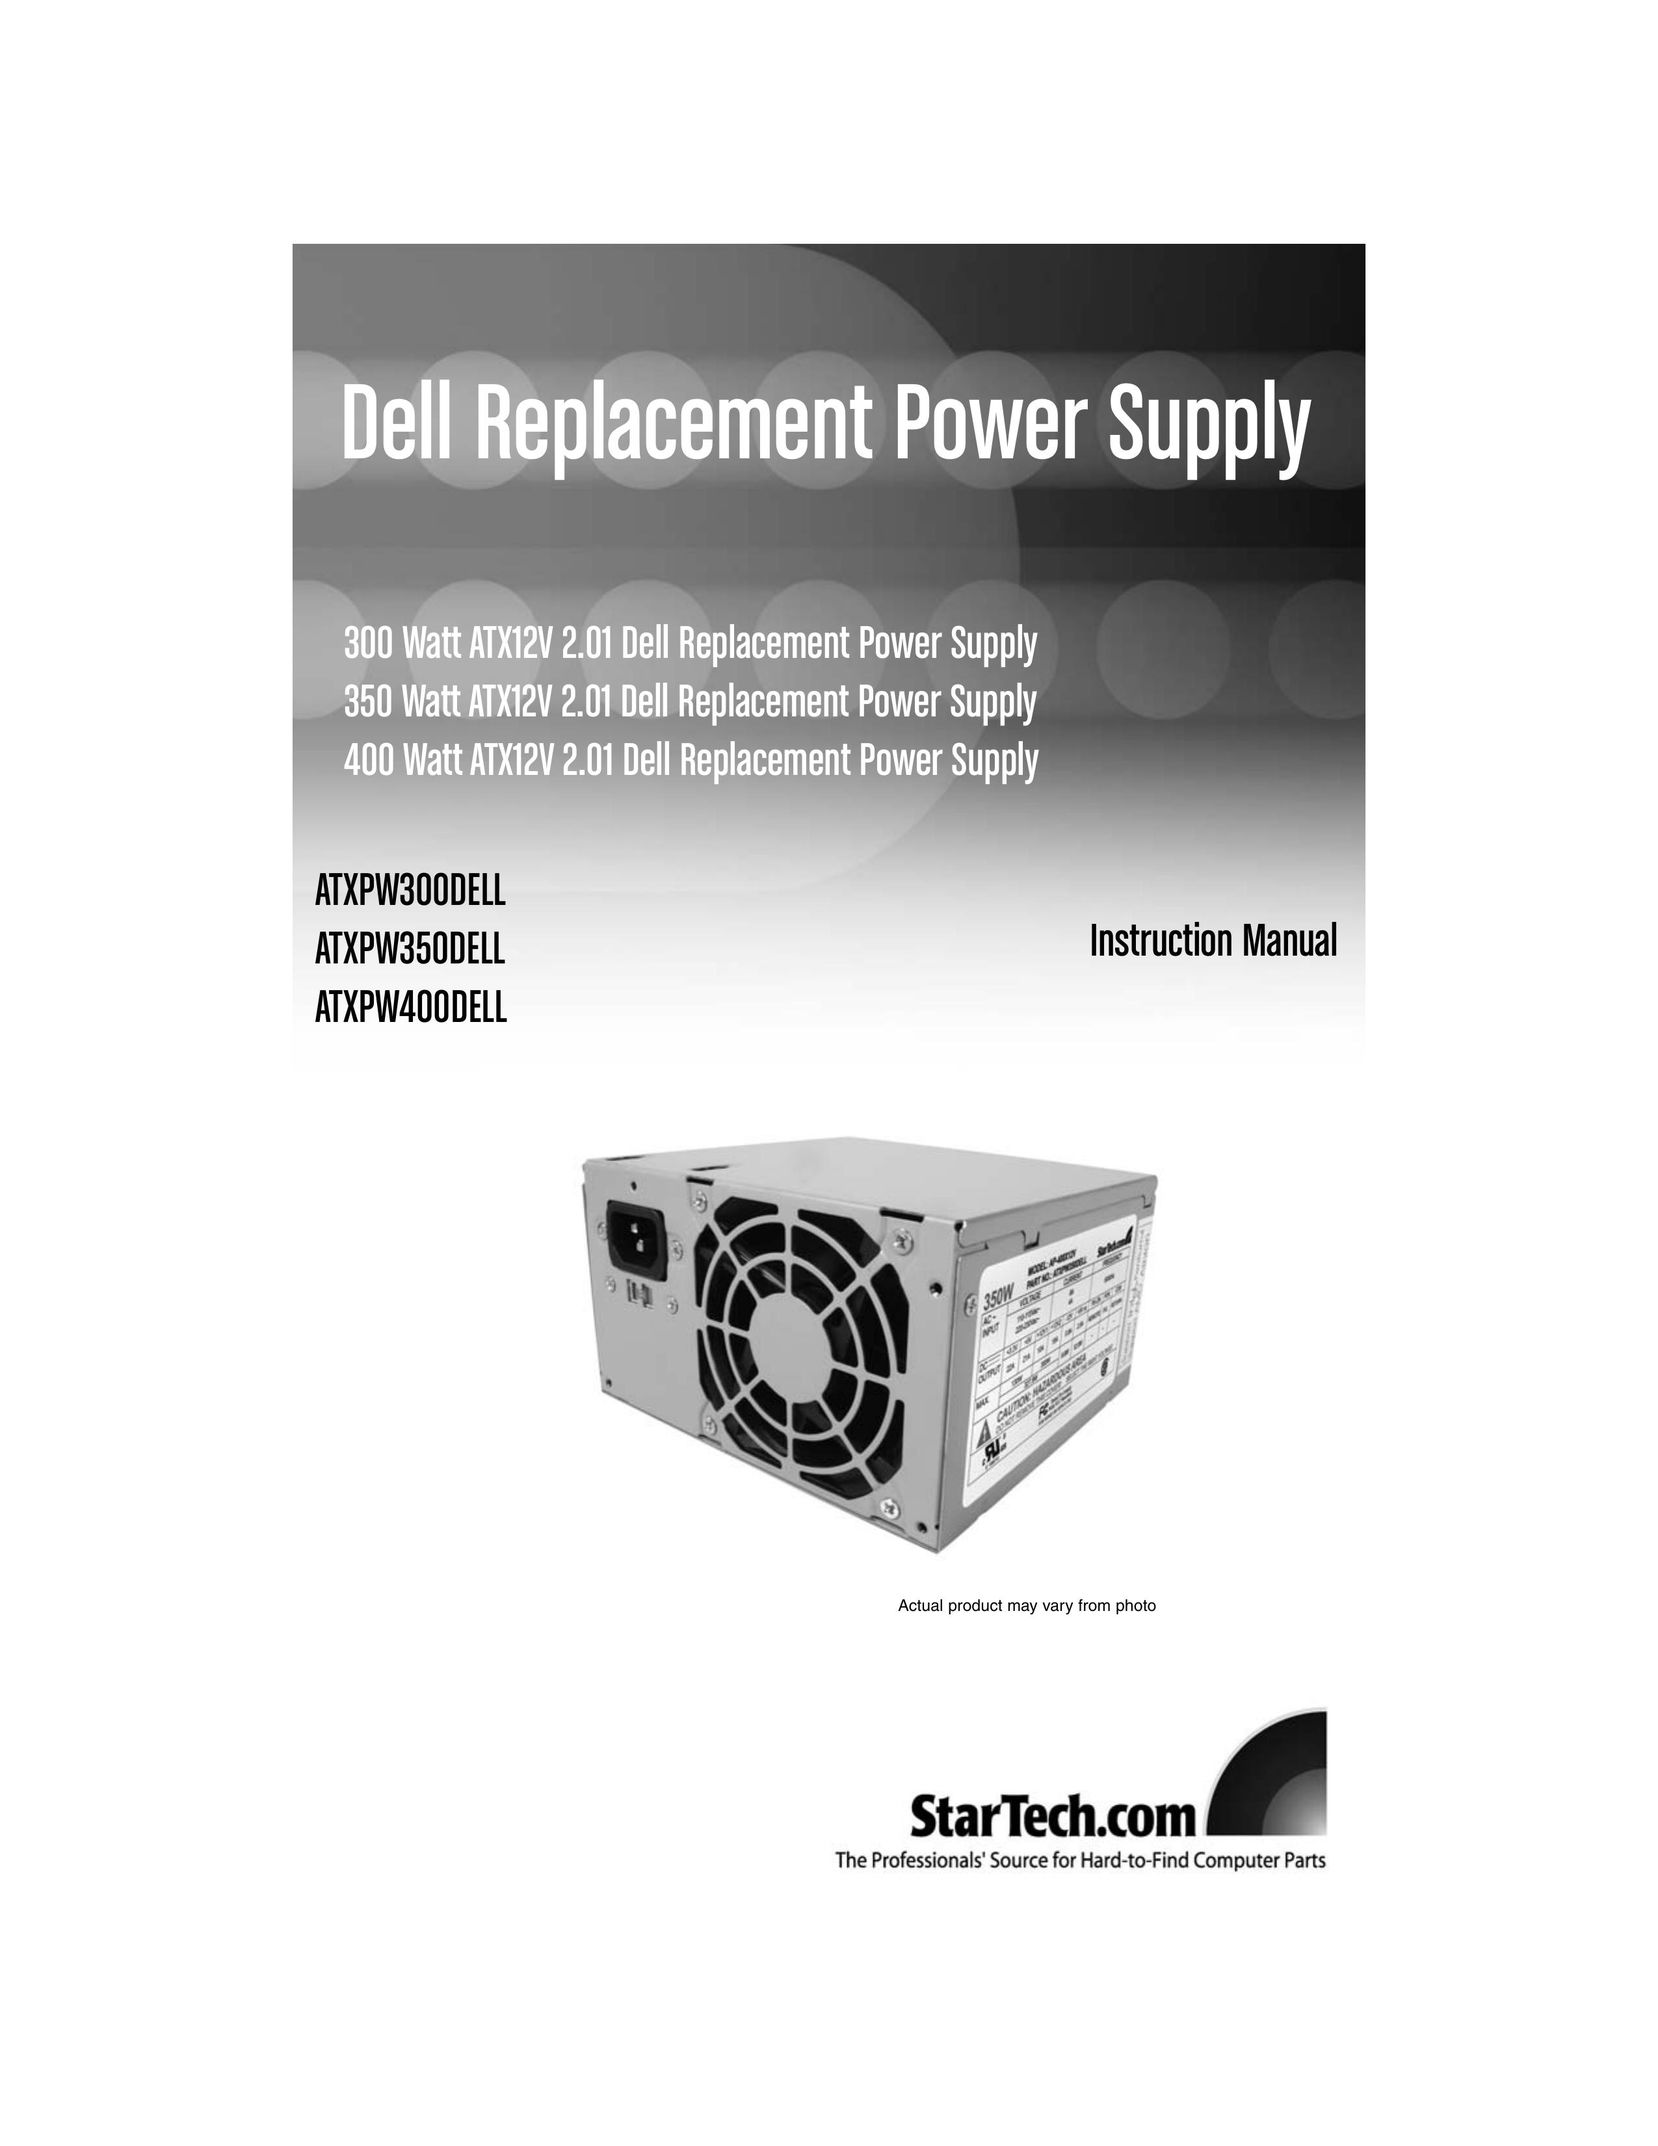 StarTech.com ATXPW350DELL Power Supply User Manual